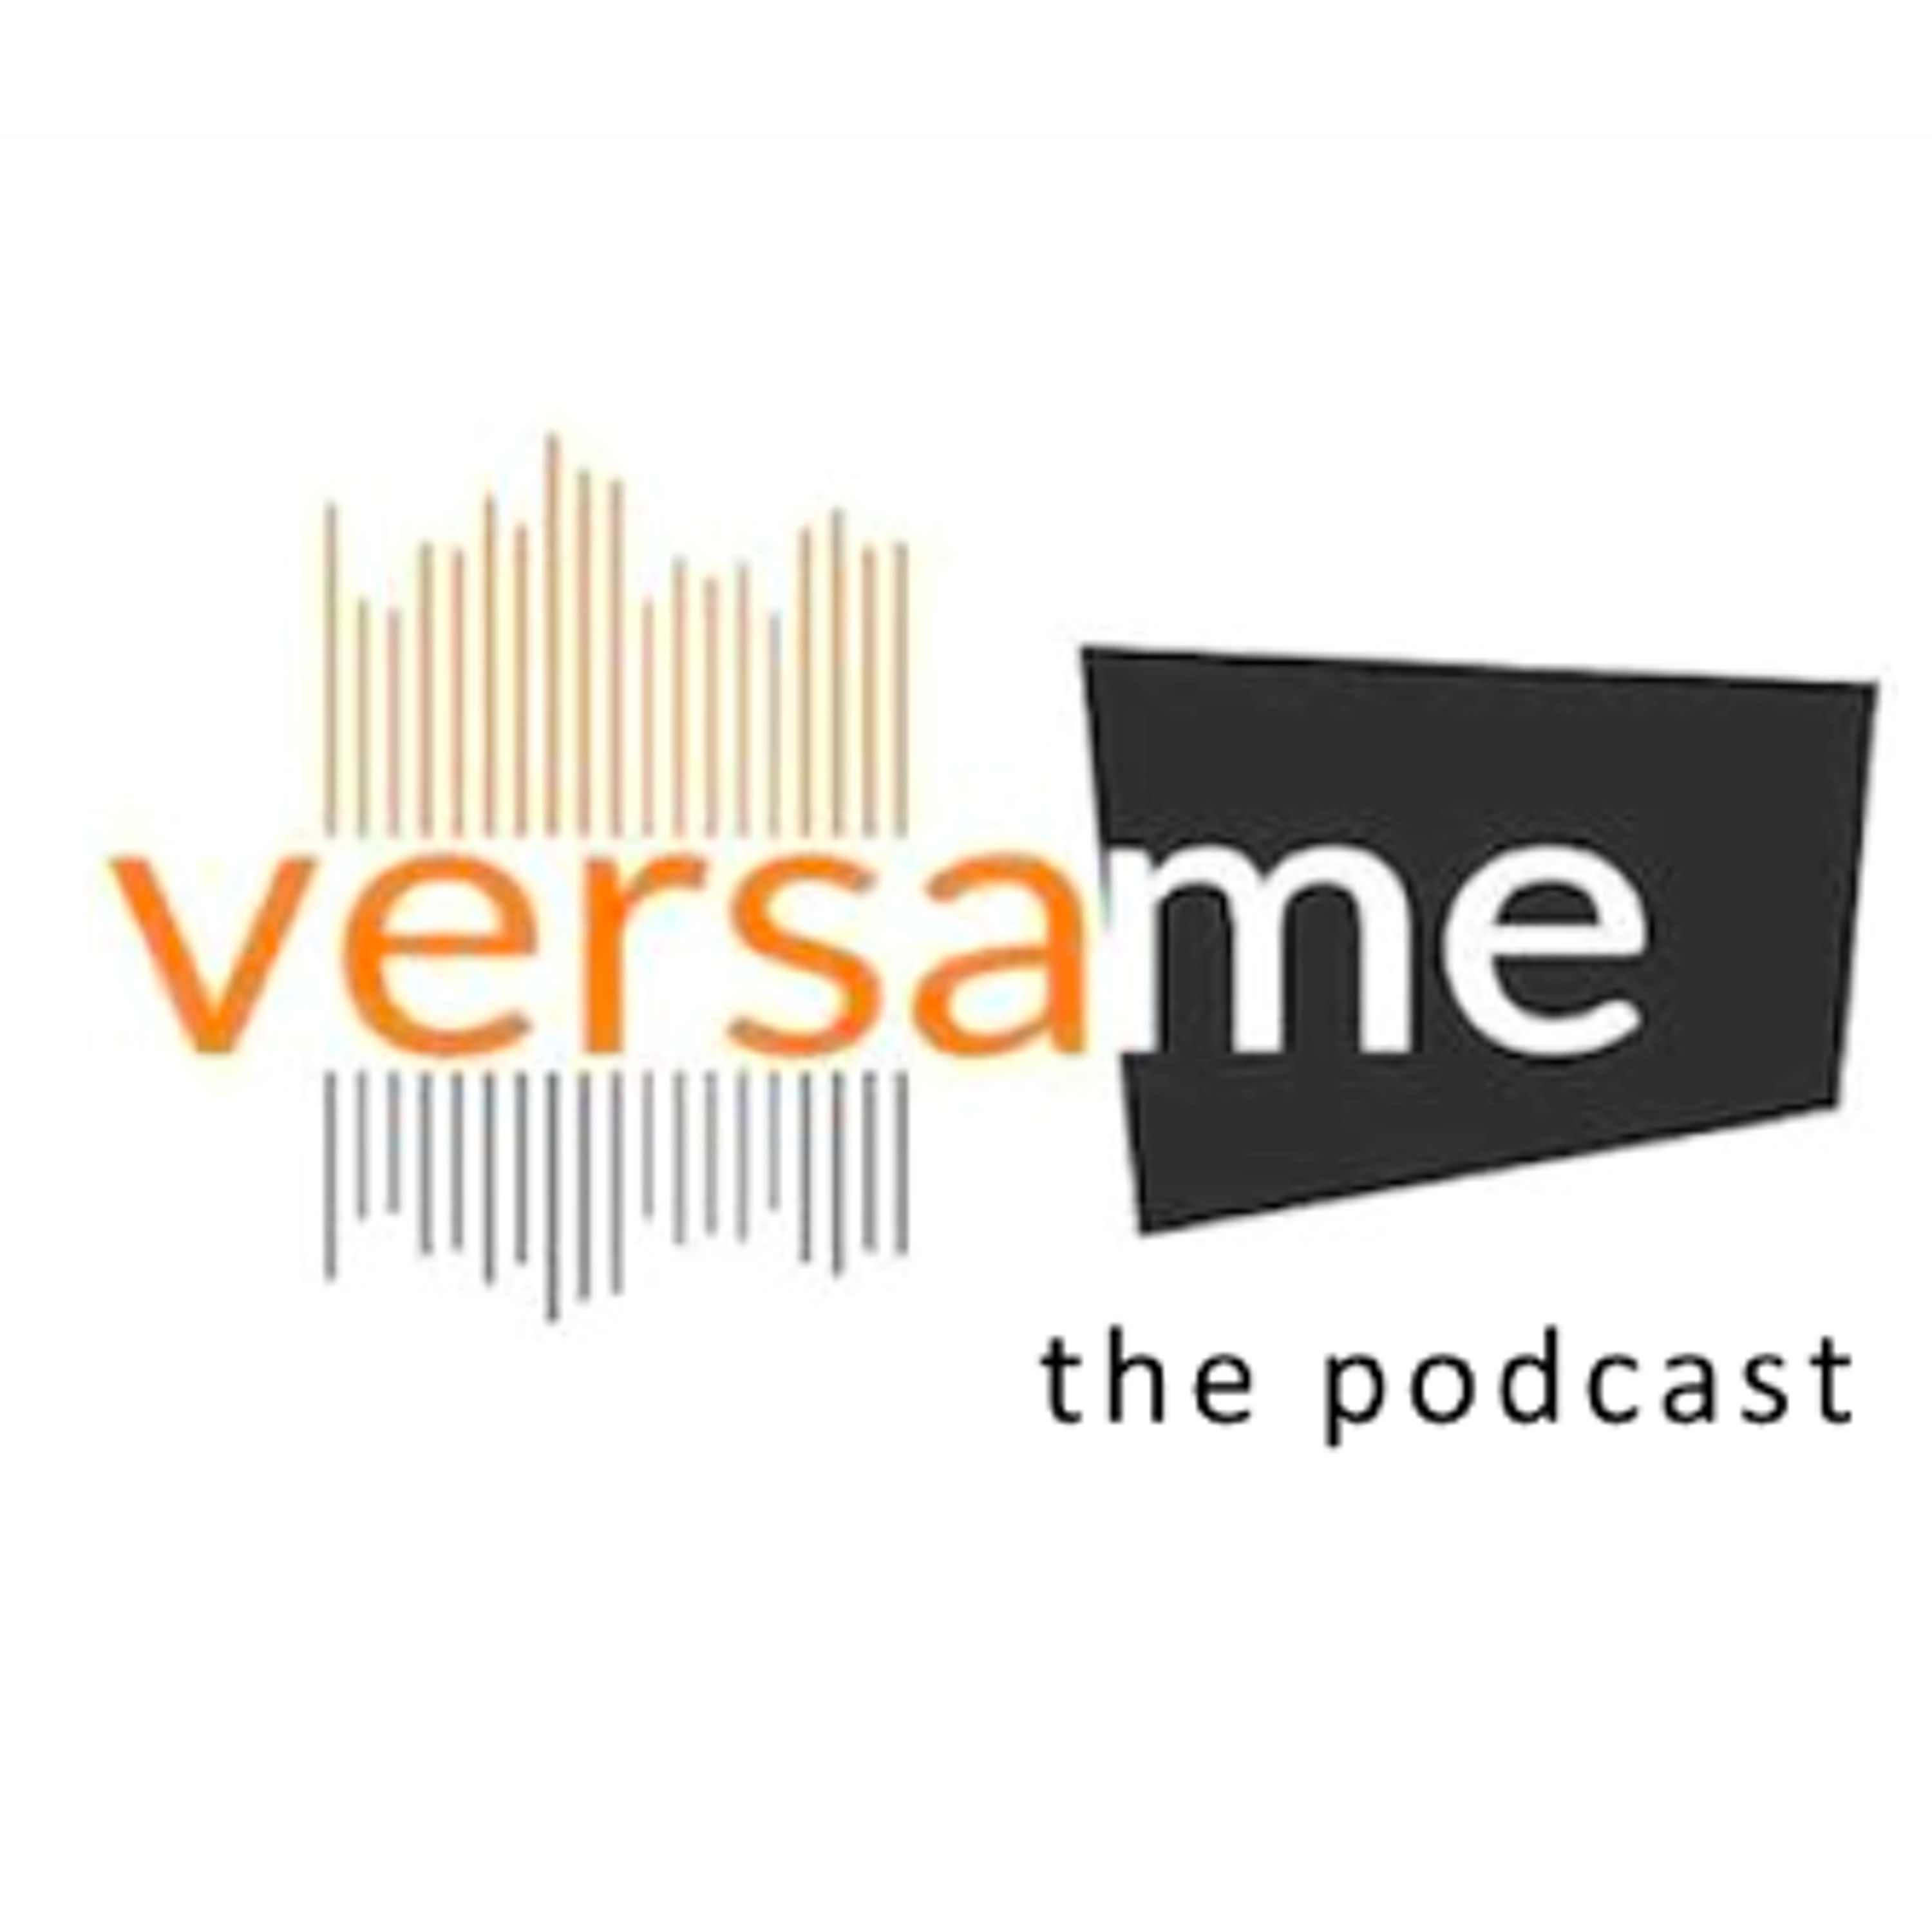 Jon and Chris on the Origins of VersaMe